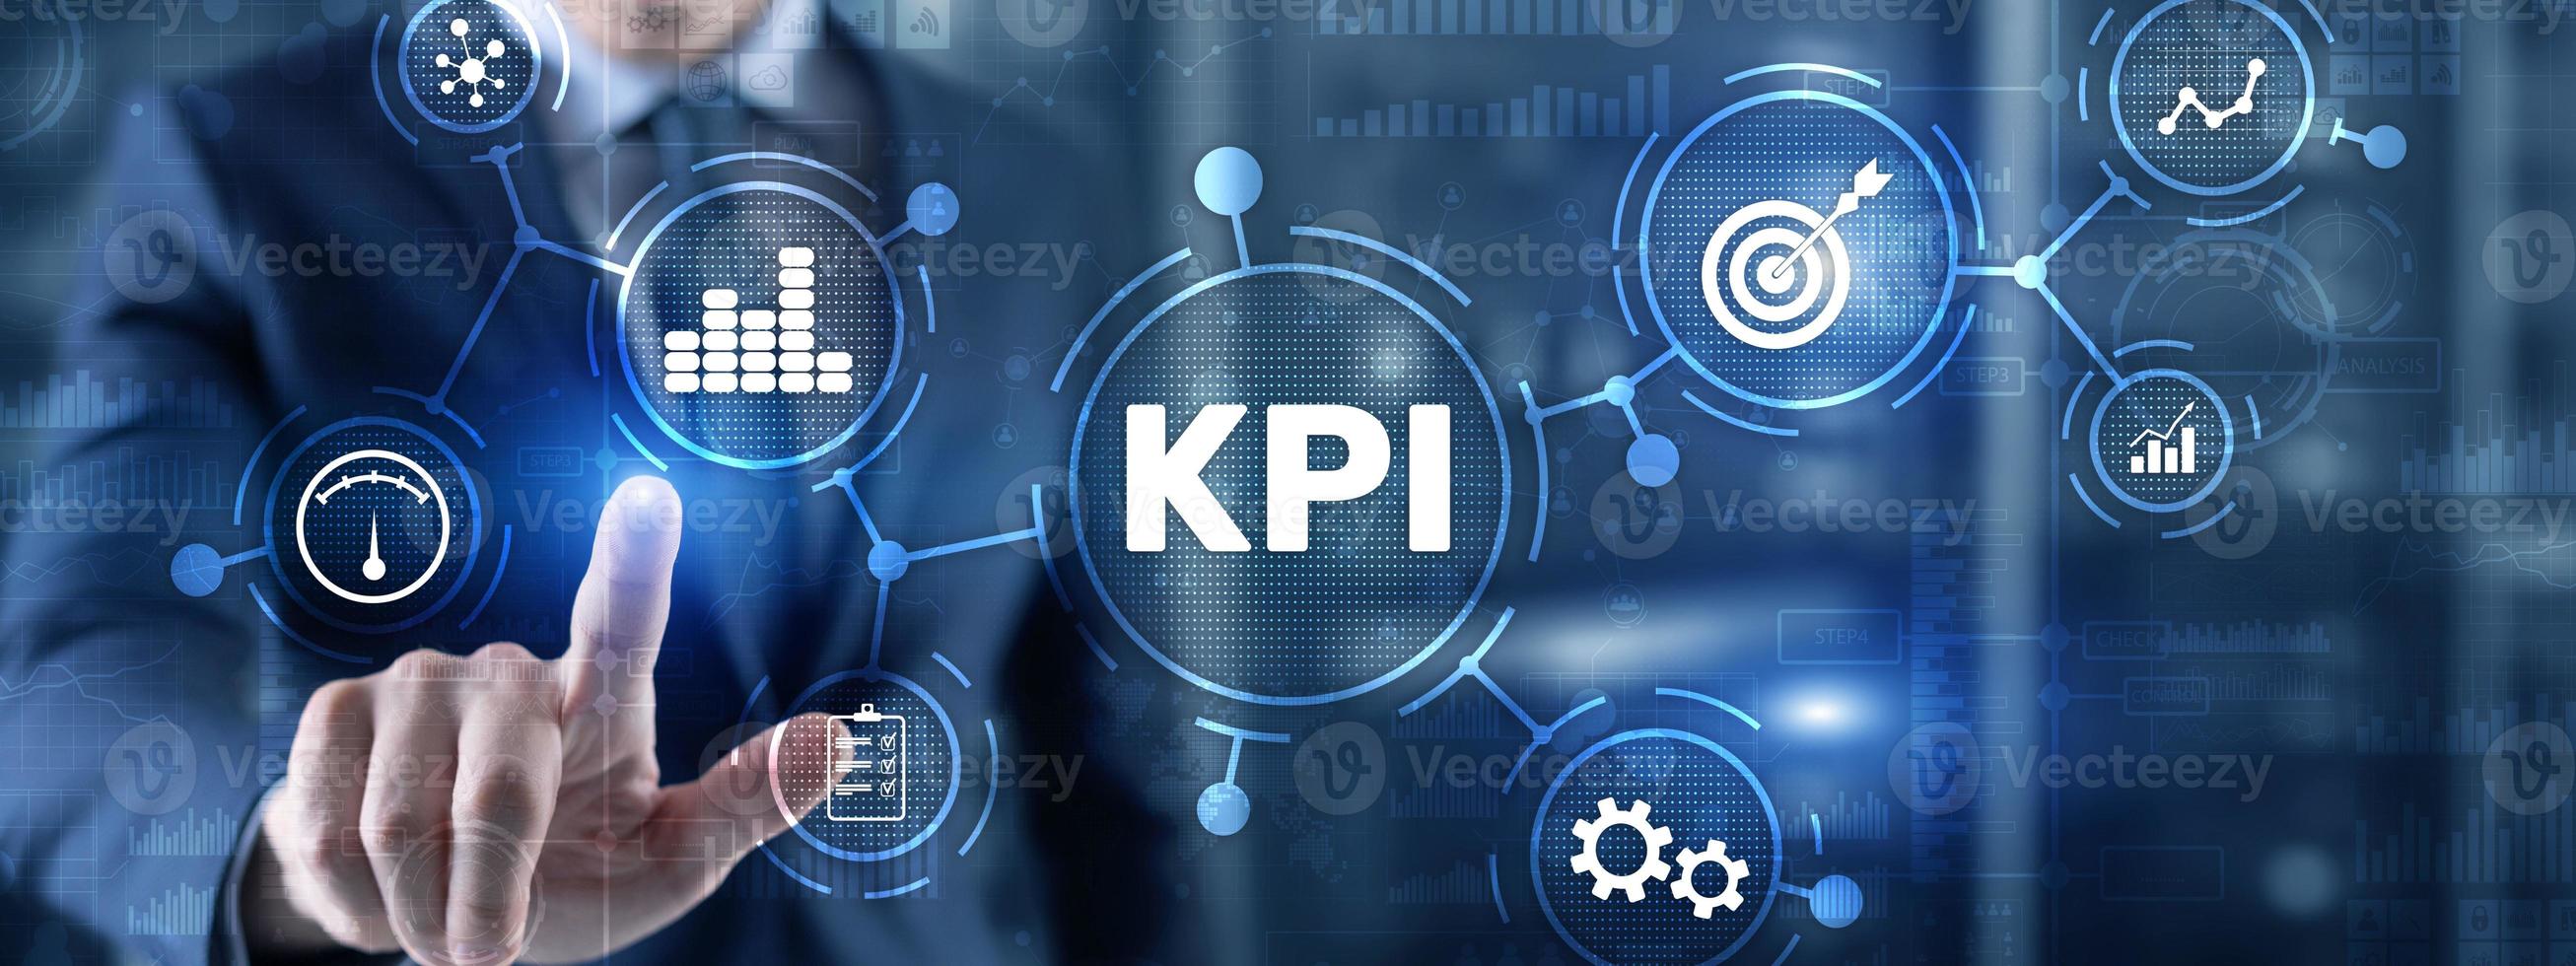 kpi key performance indicator zakelijke internettechnologie concept op virtueel scherm foto